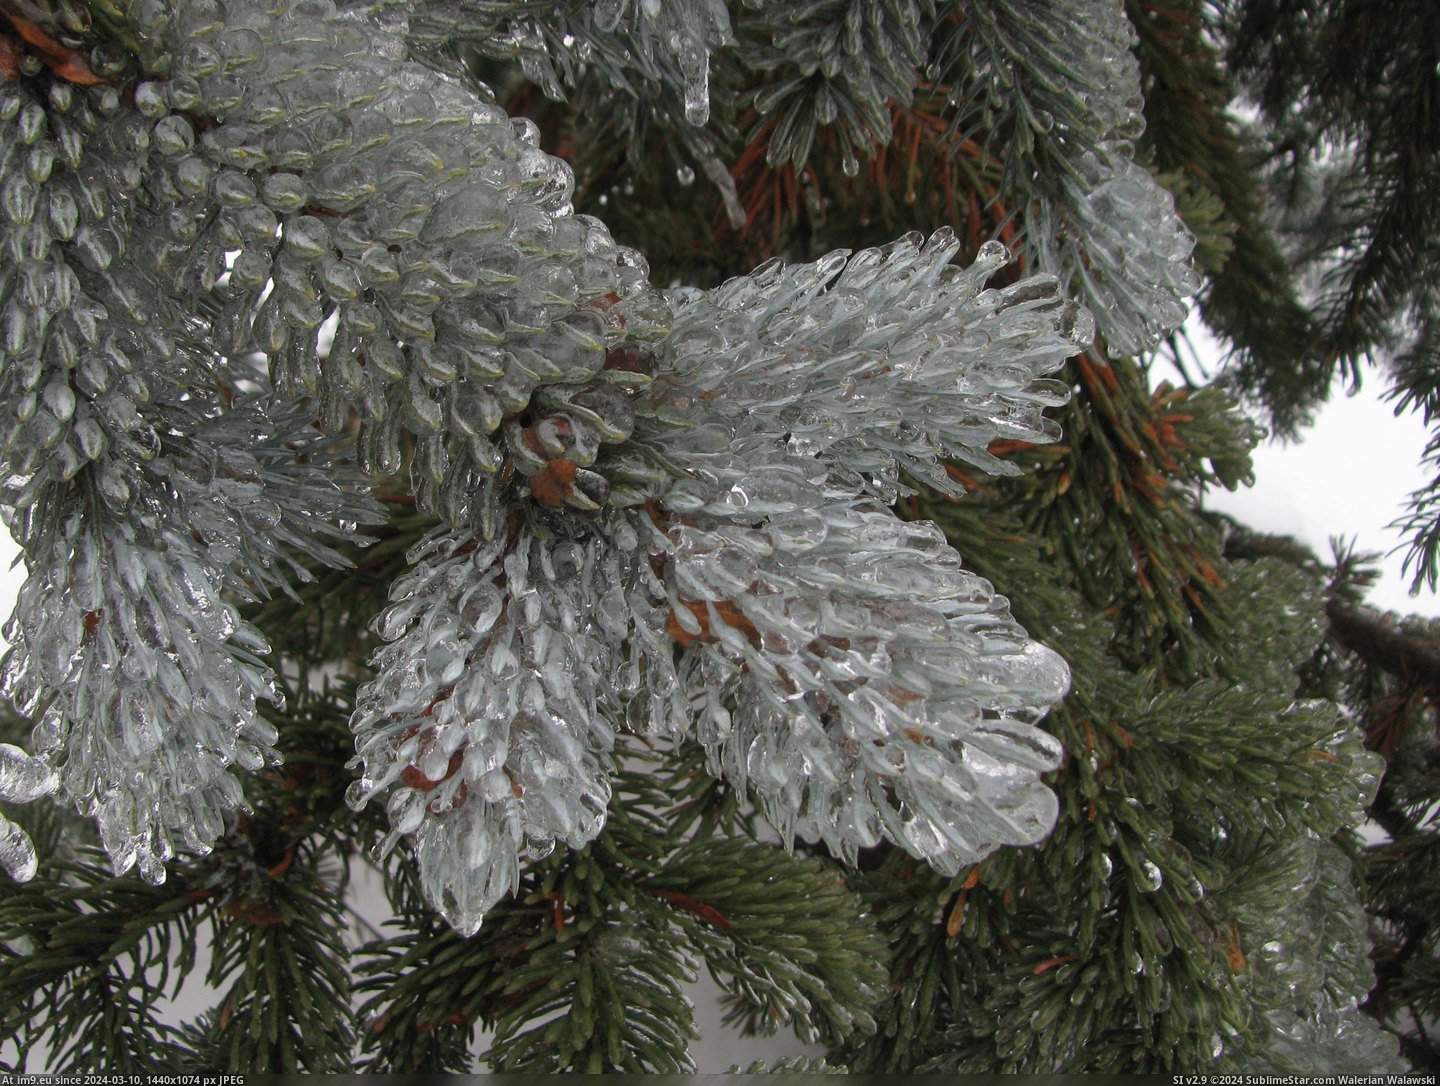 #Tree #Ice #Pine #Encased #Storm #Yard [Pics] The pine tree in my yard is encased in ice after a storm. Pic. (Obraz z album My r/PICS favs))